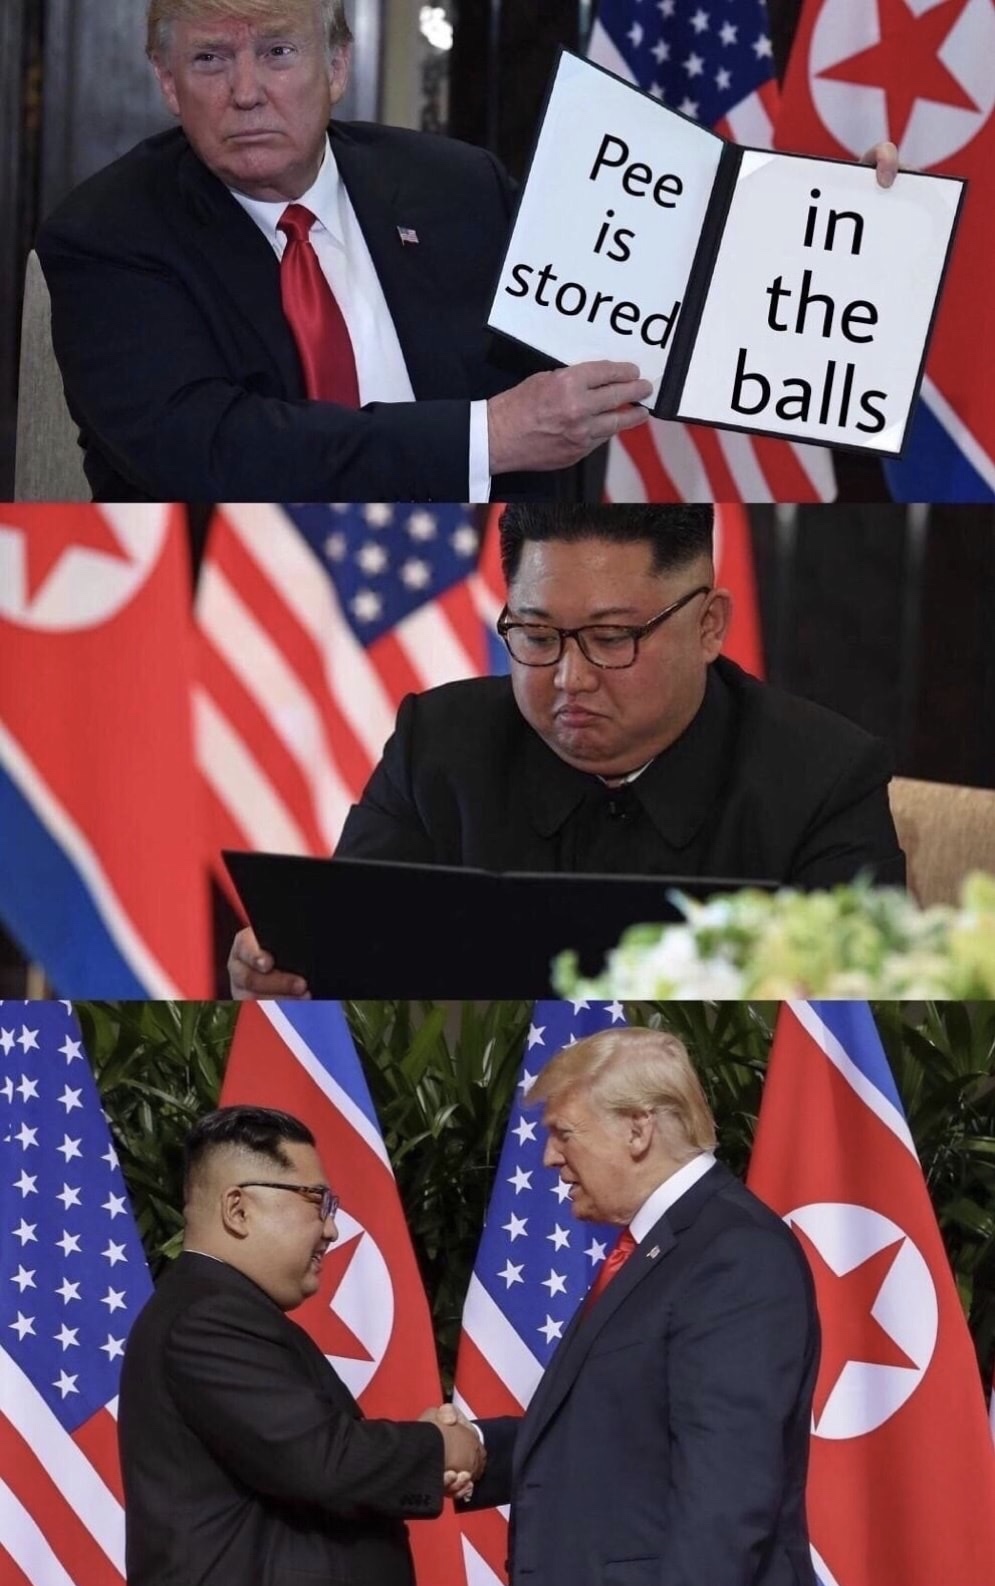 trump kim summit memes - is Pee stored balls the | in